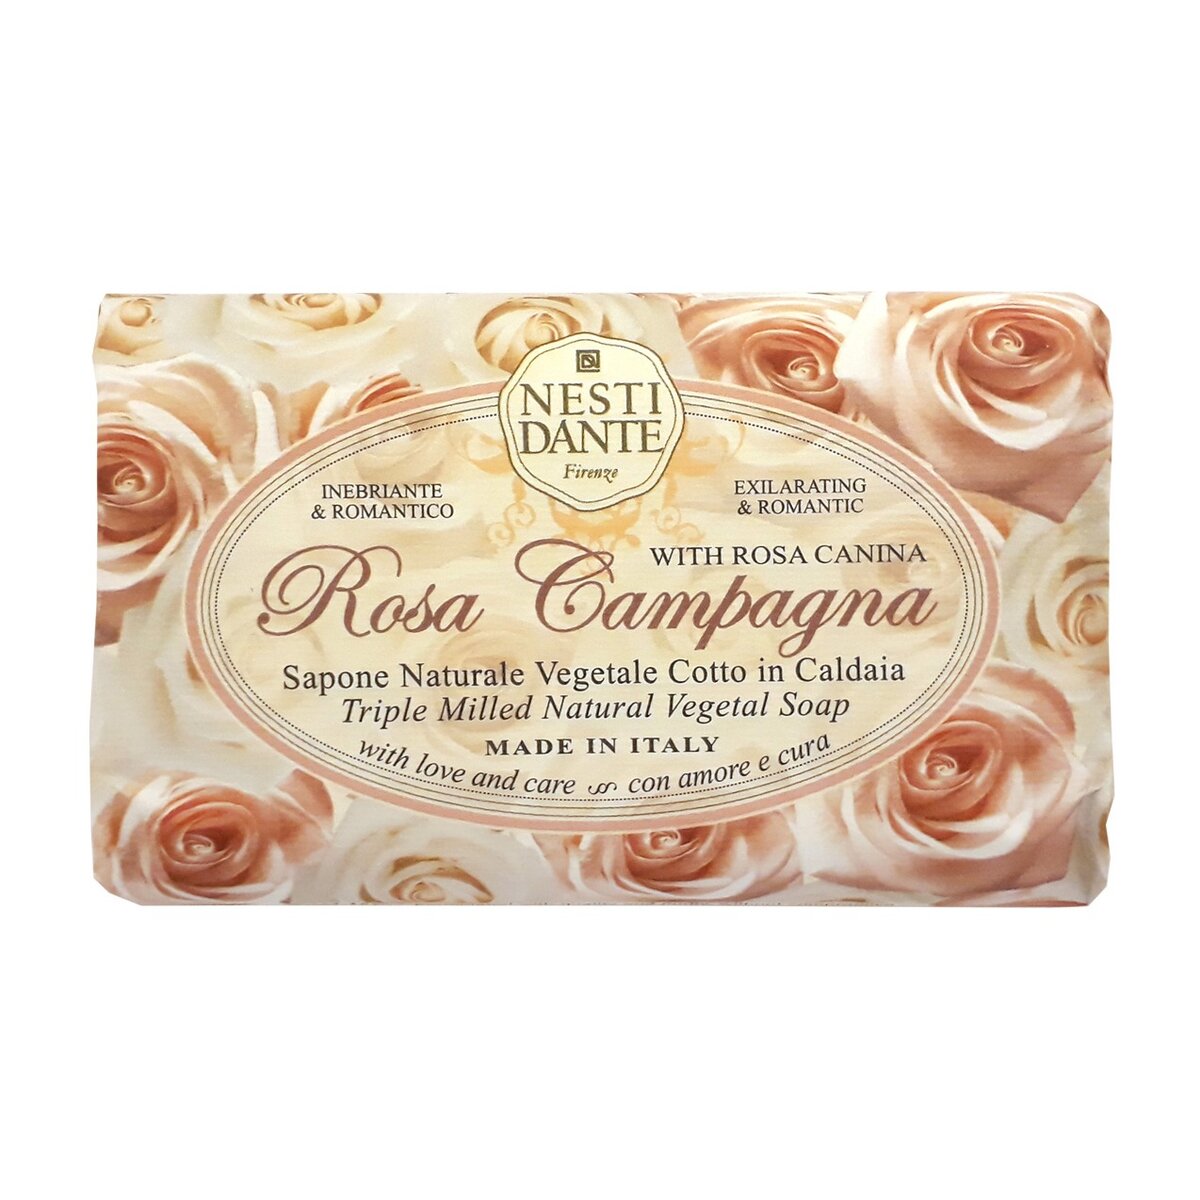 Nesti dante мыло роза из кампаньи 150 г